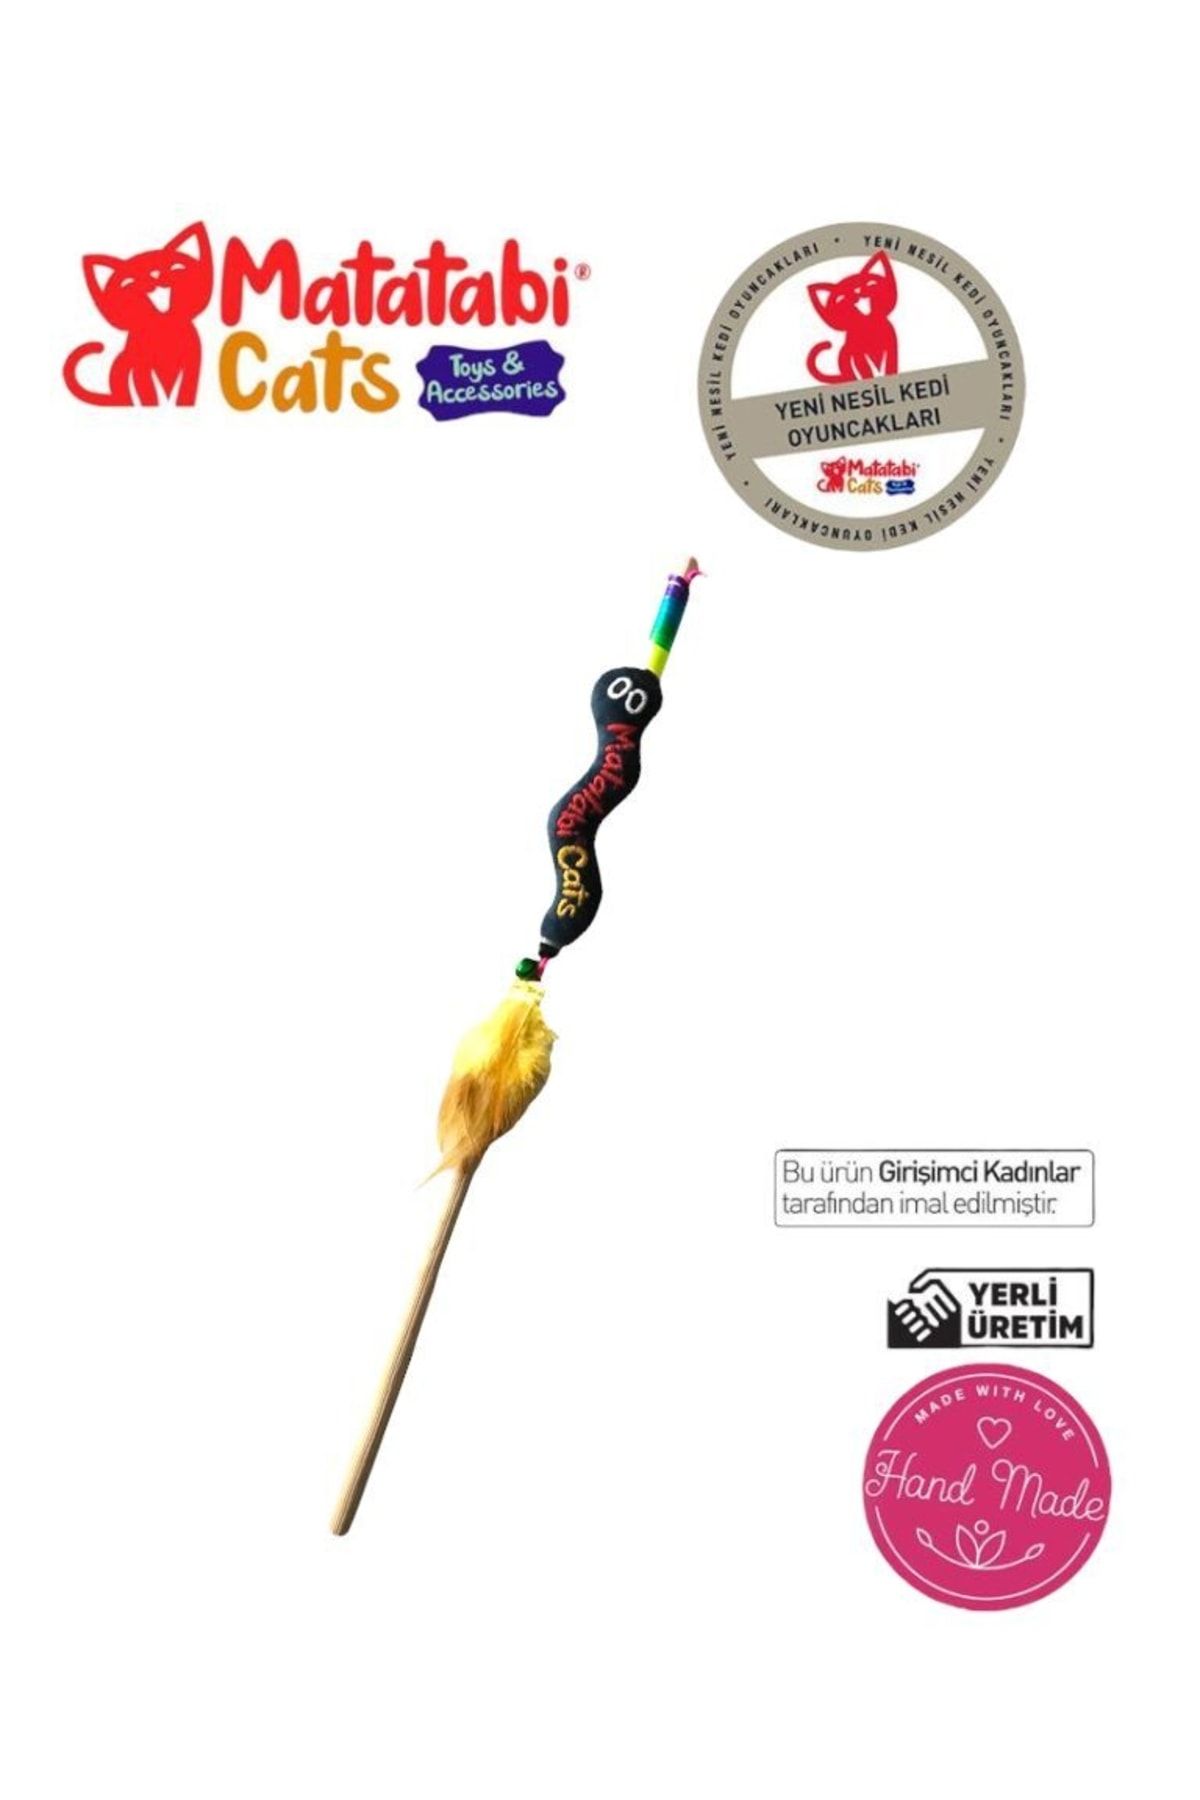 MATATABİ CATS Wormy Wooden Handled Cat Fishing Rod with Plush Cat